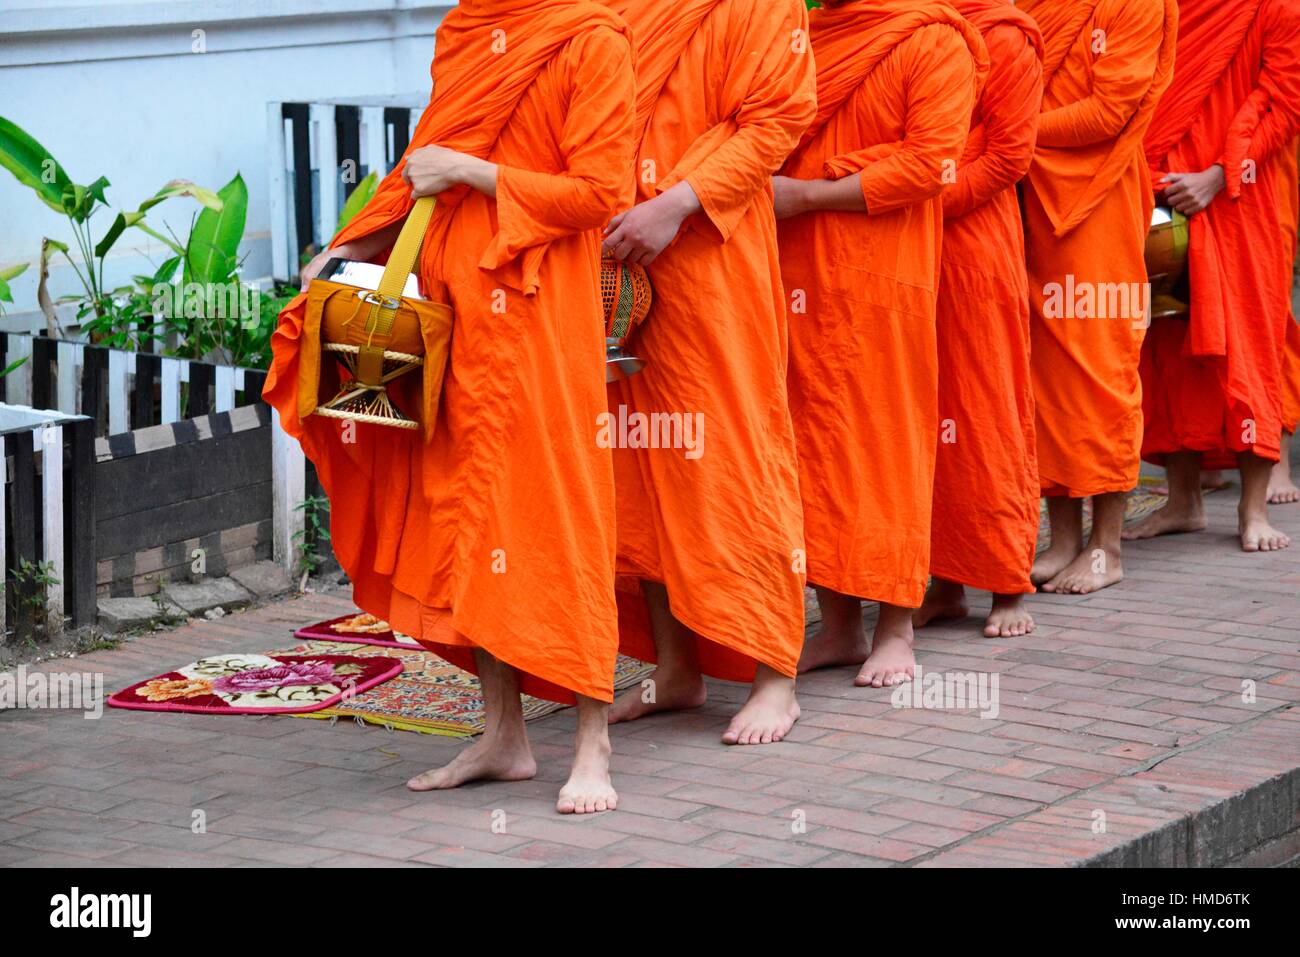 Los monjes recolectar alimentos ofertas de lugareños en Luang Prabang, Laos, Sudeste de Asia. Foto de stock